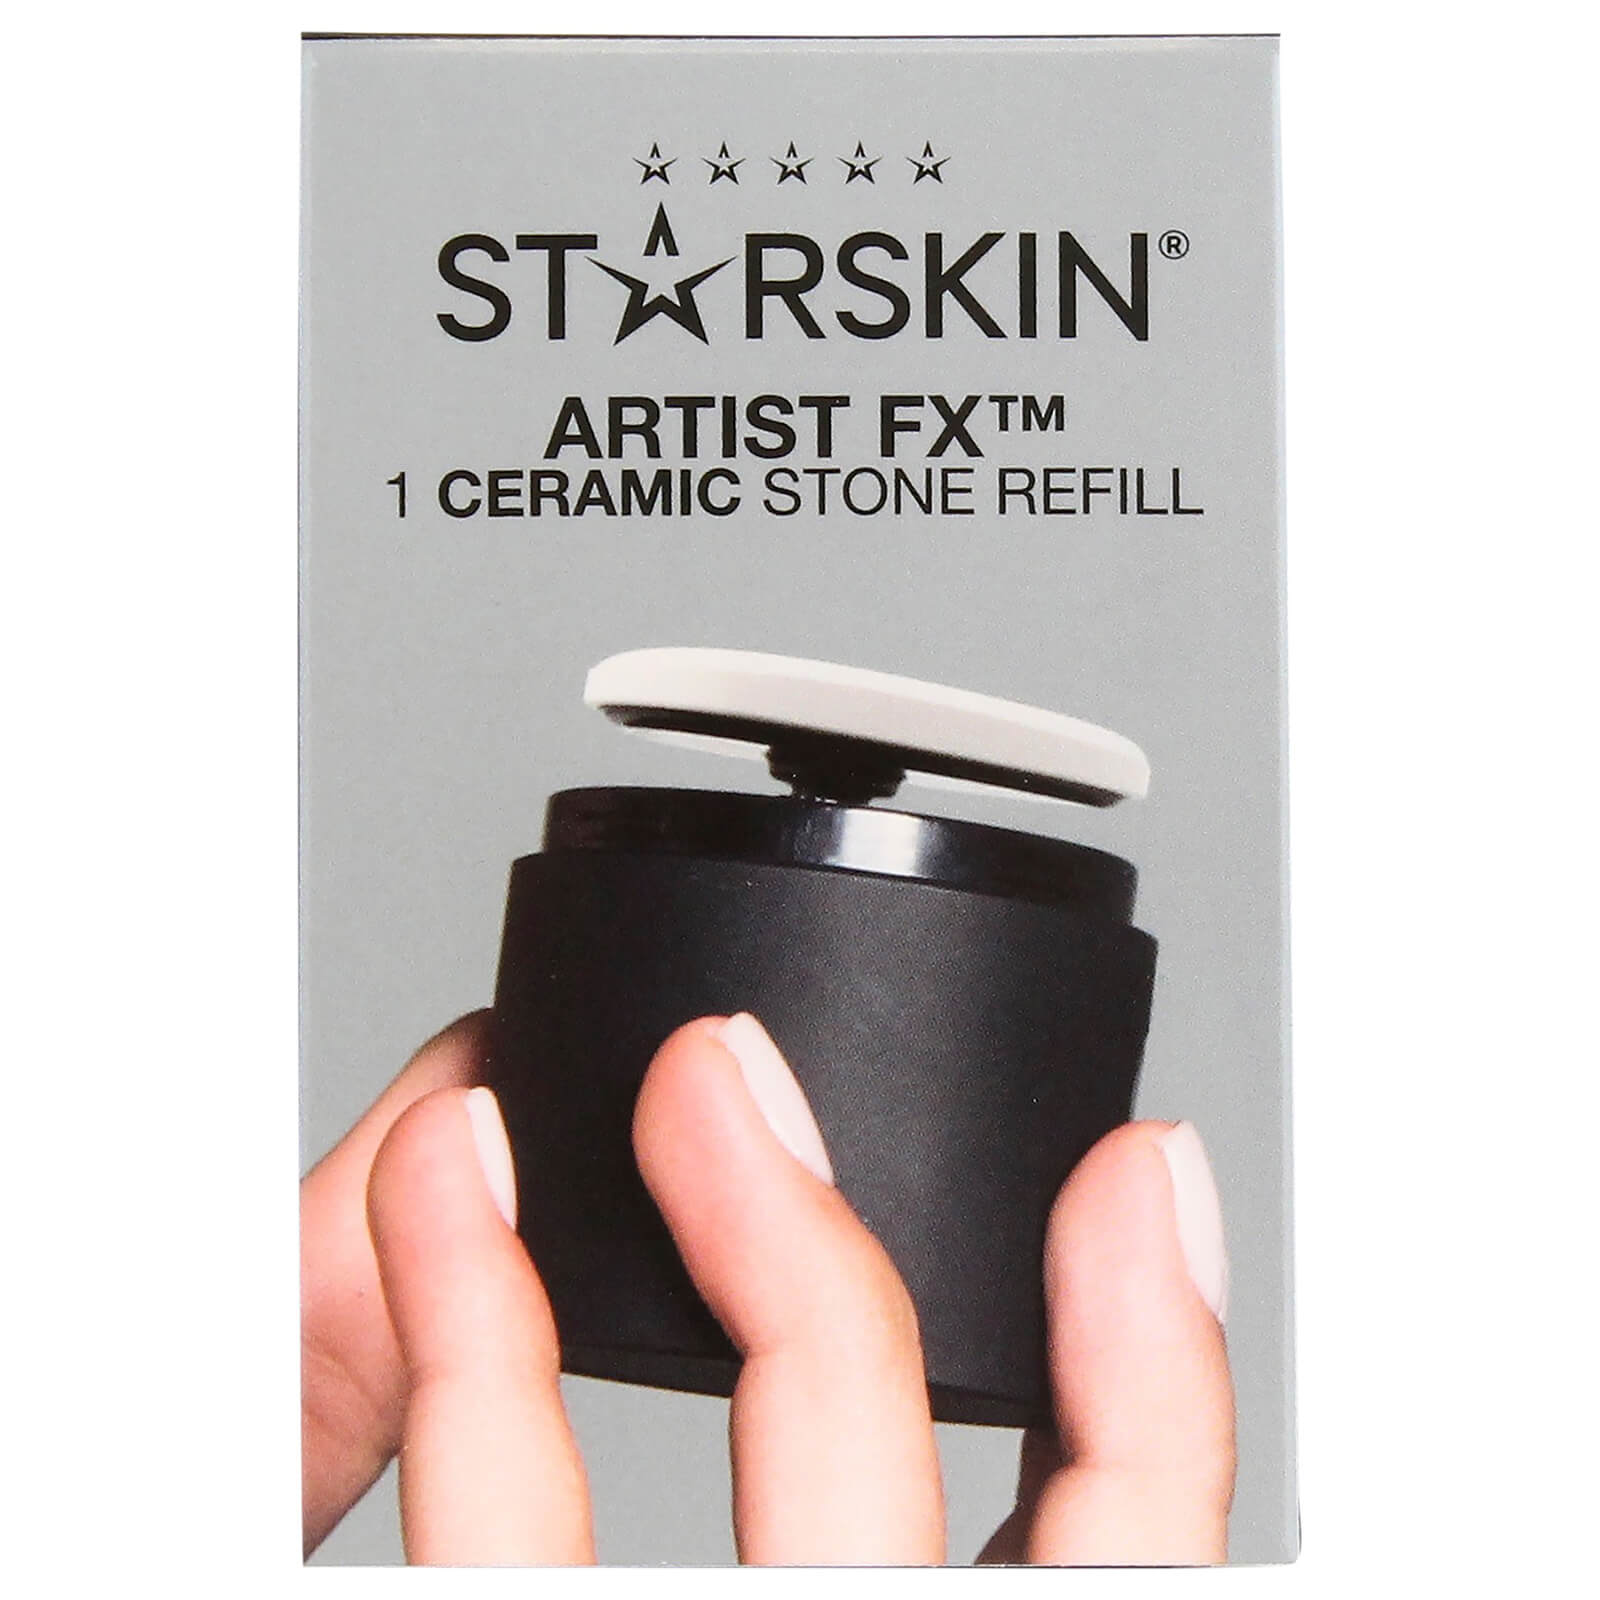 Paquete con recarga de piedra de cerámica Artist FX™ de STARSKIN